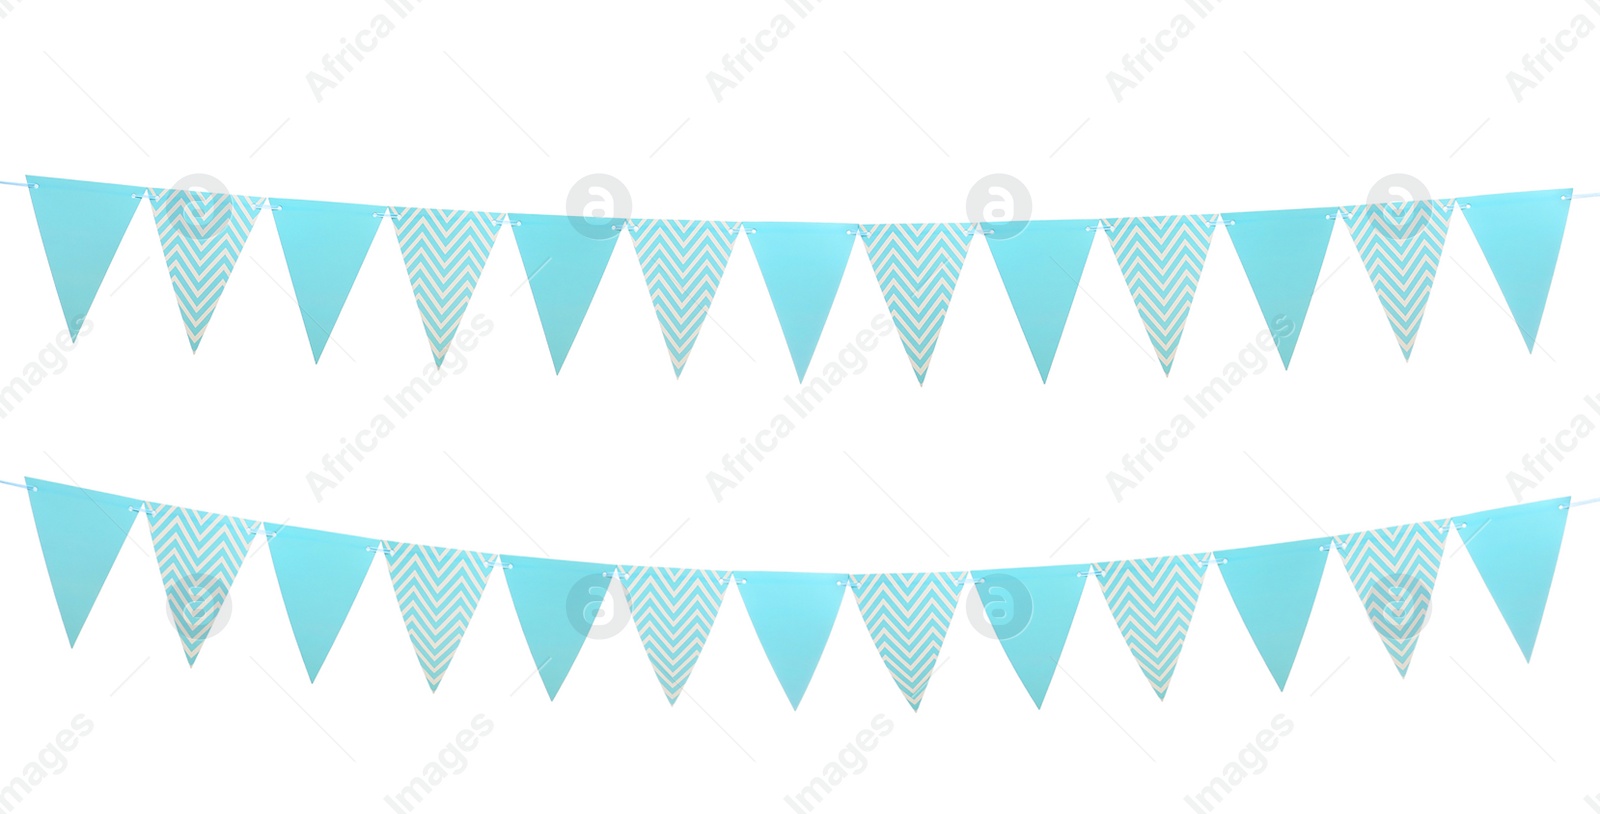 Image of Light blue triangular bunting flags on white background, banner design. Festive decor